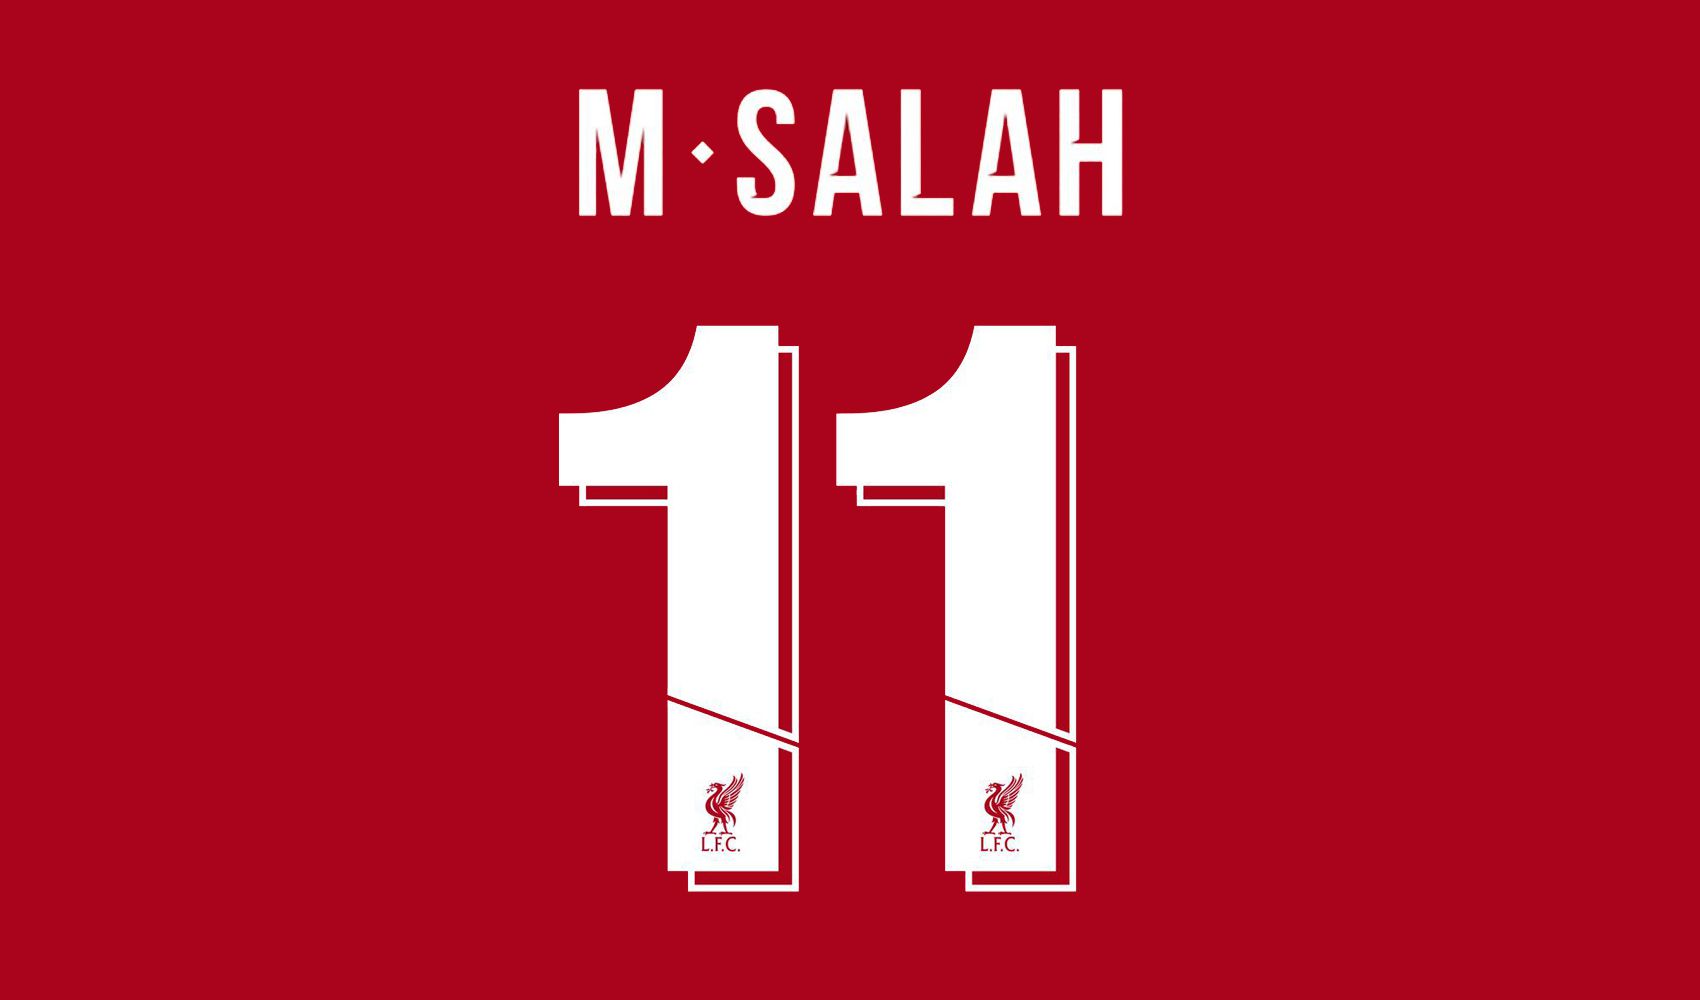 Font Liverpool 18-19